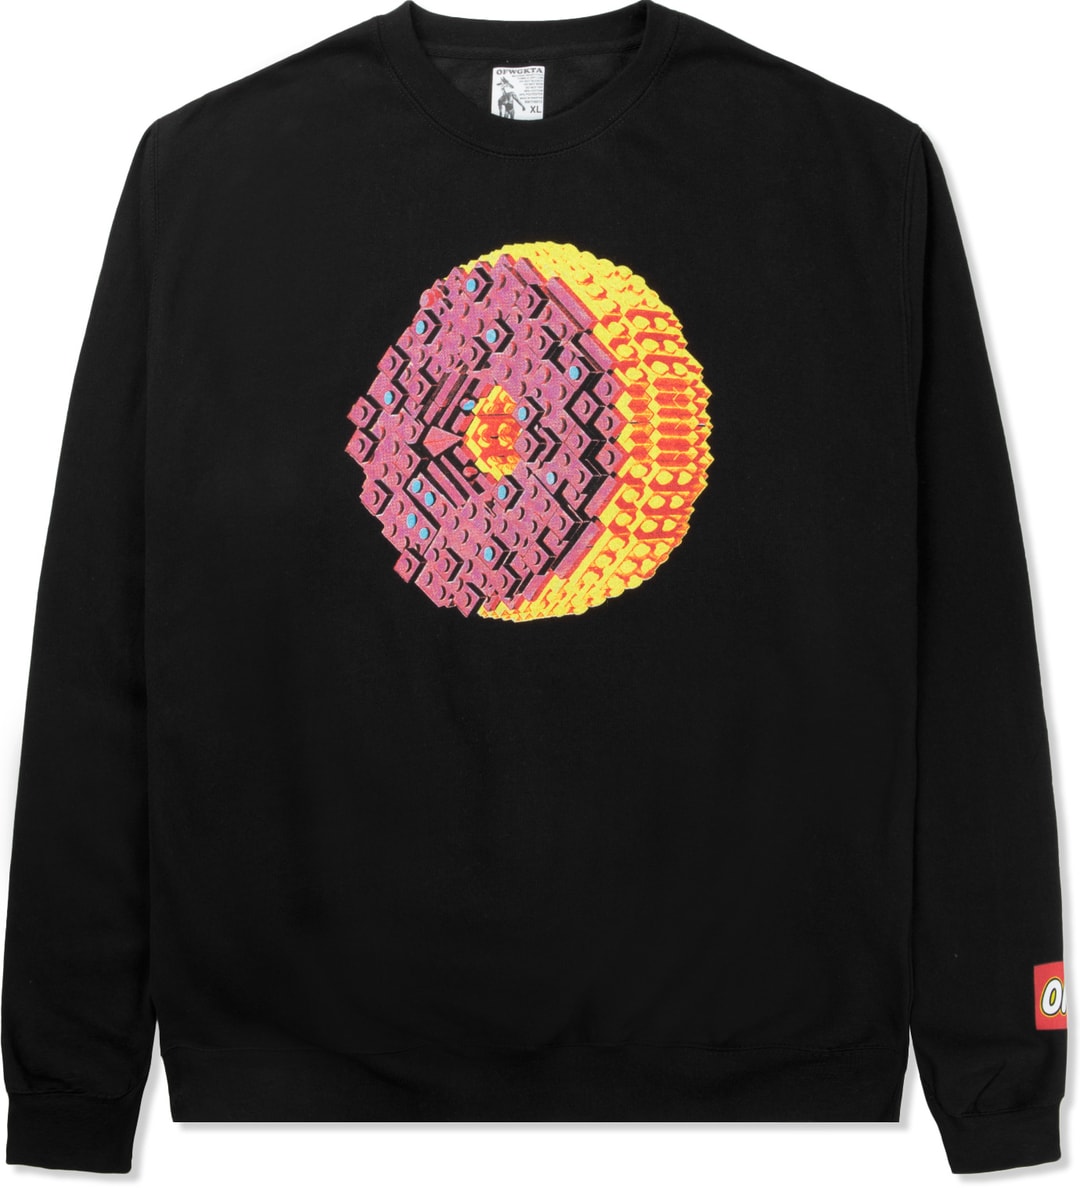 Odd Future - Black OF Donut Crewneck Sweater | HBX - Globally Curated ...